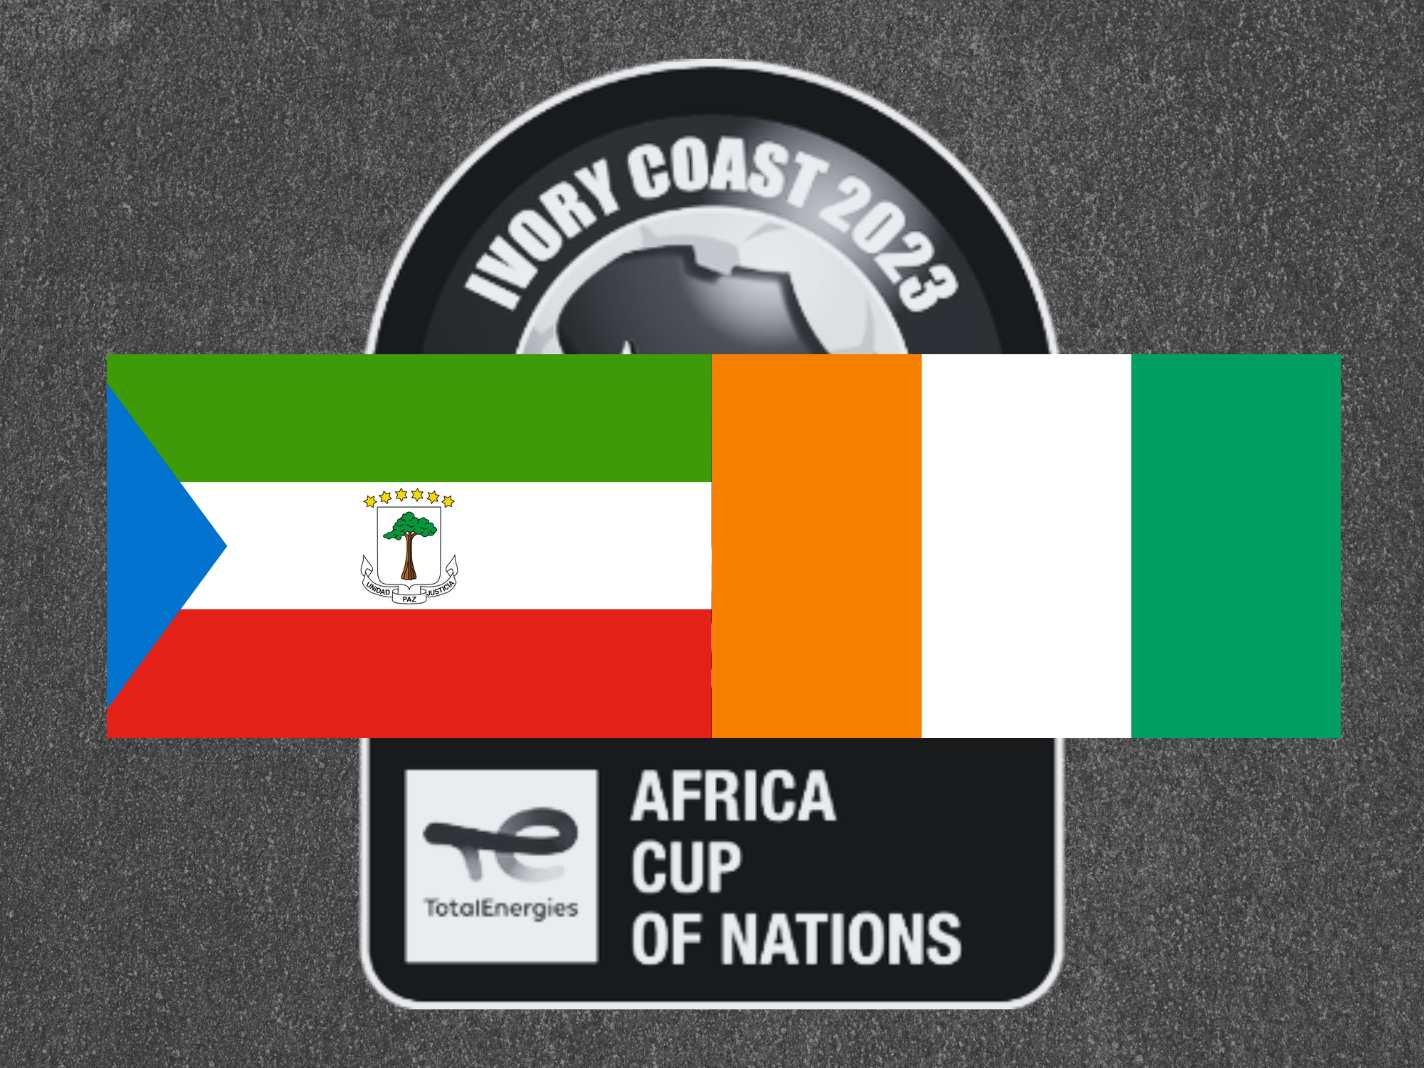 6 Bets We Want to Make on Equatorial Guinea vs Ivory Coast